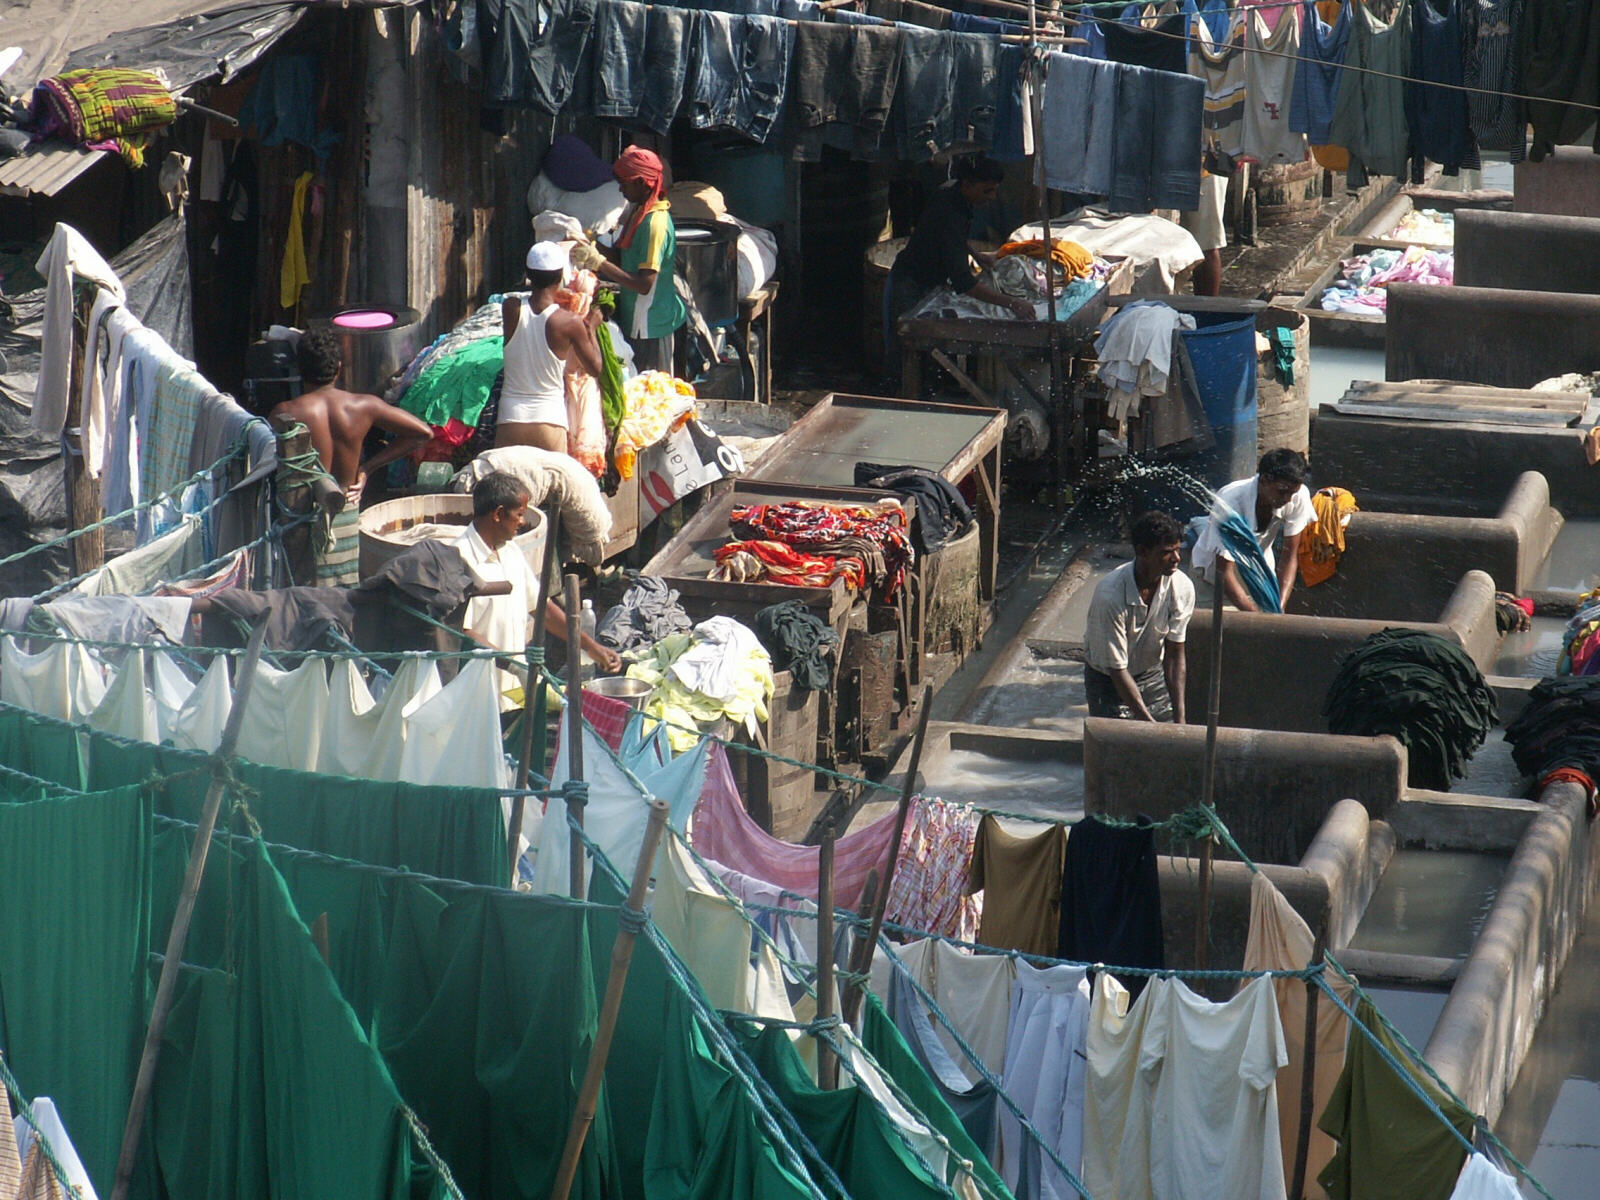 The washing ghats in Bombay / Mumbai